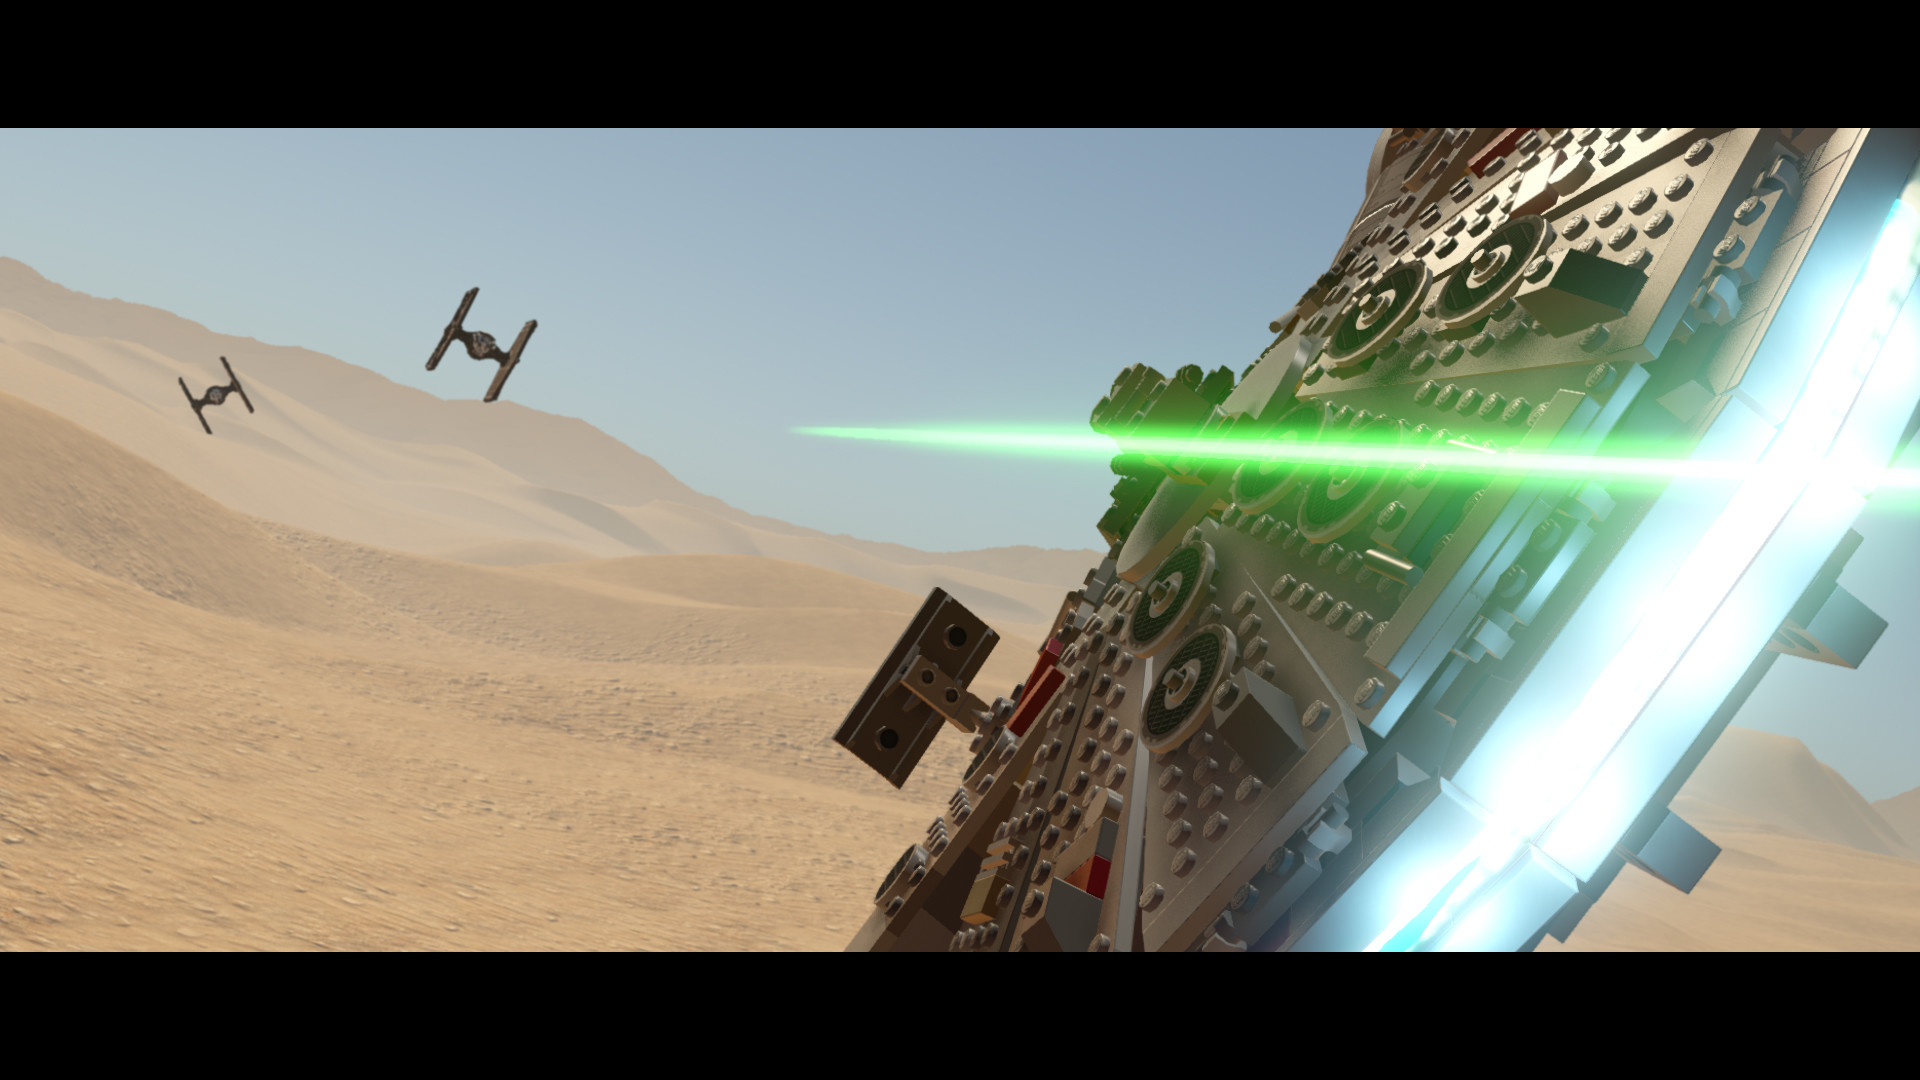 LEGO STAR WARS: The Force Awakens screenshot